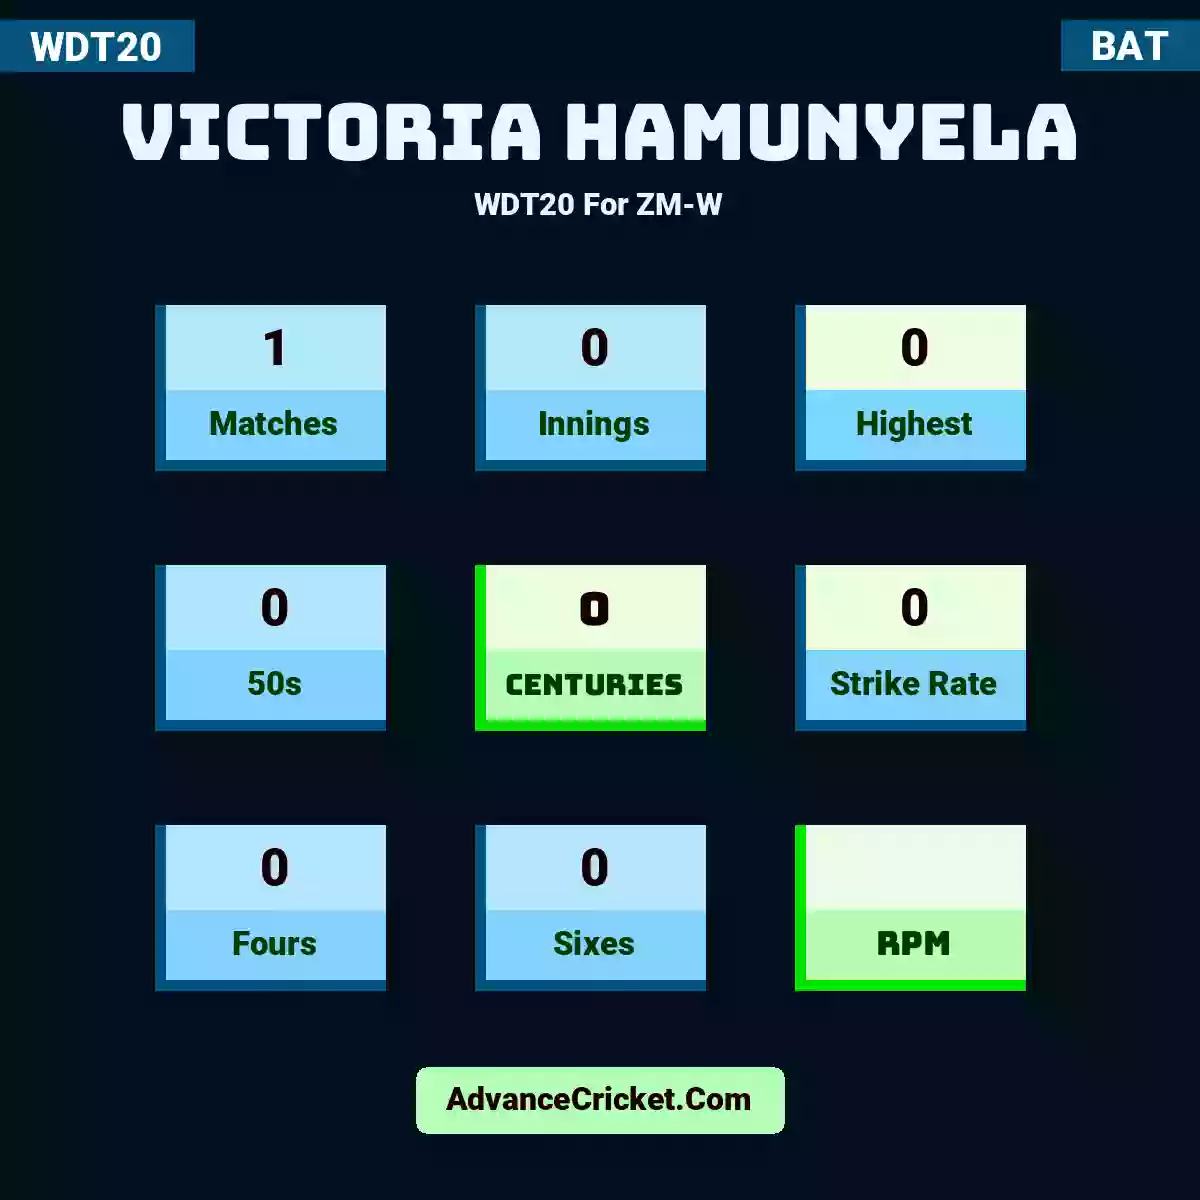 Victoria Hamunyela WDT20  For ZM-W, Victoria Hamunyela played 1 matches, scored 0 runs as highest, 0 half-centuries, and 0 centuries, with a strike rate of 0. V.Hamunyela hit 0 fours and 0 sixes.